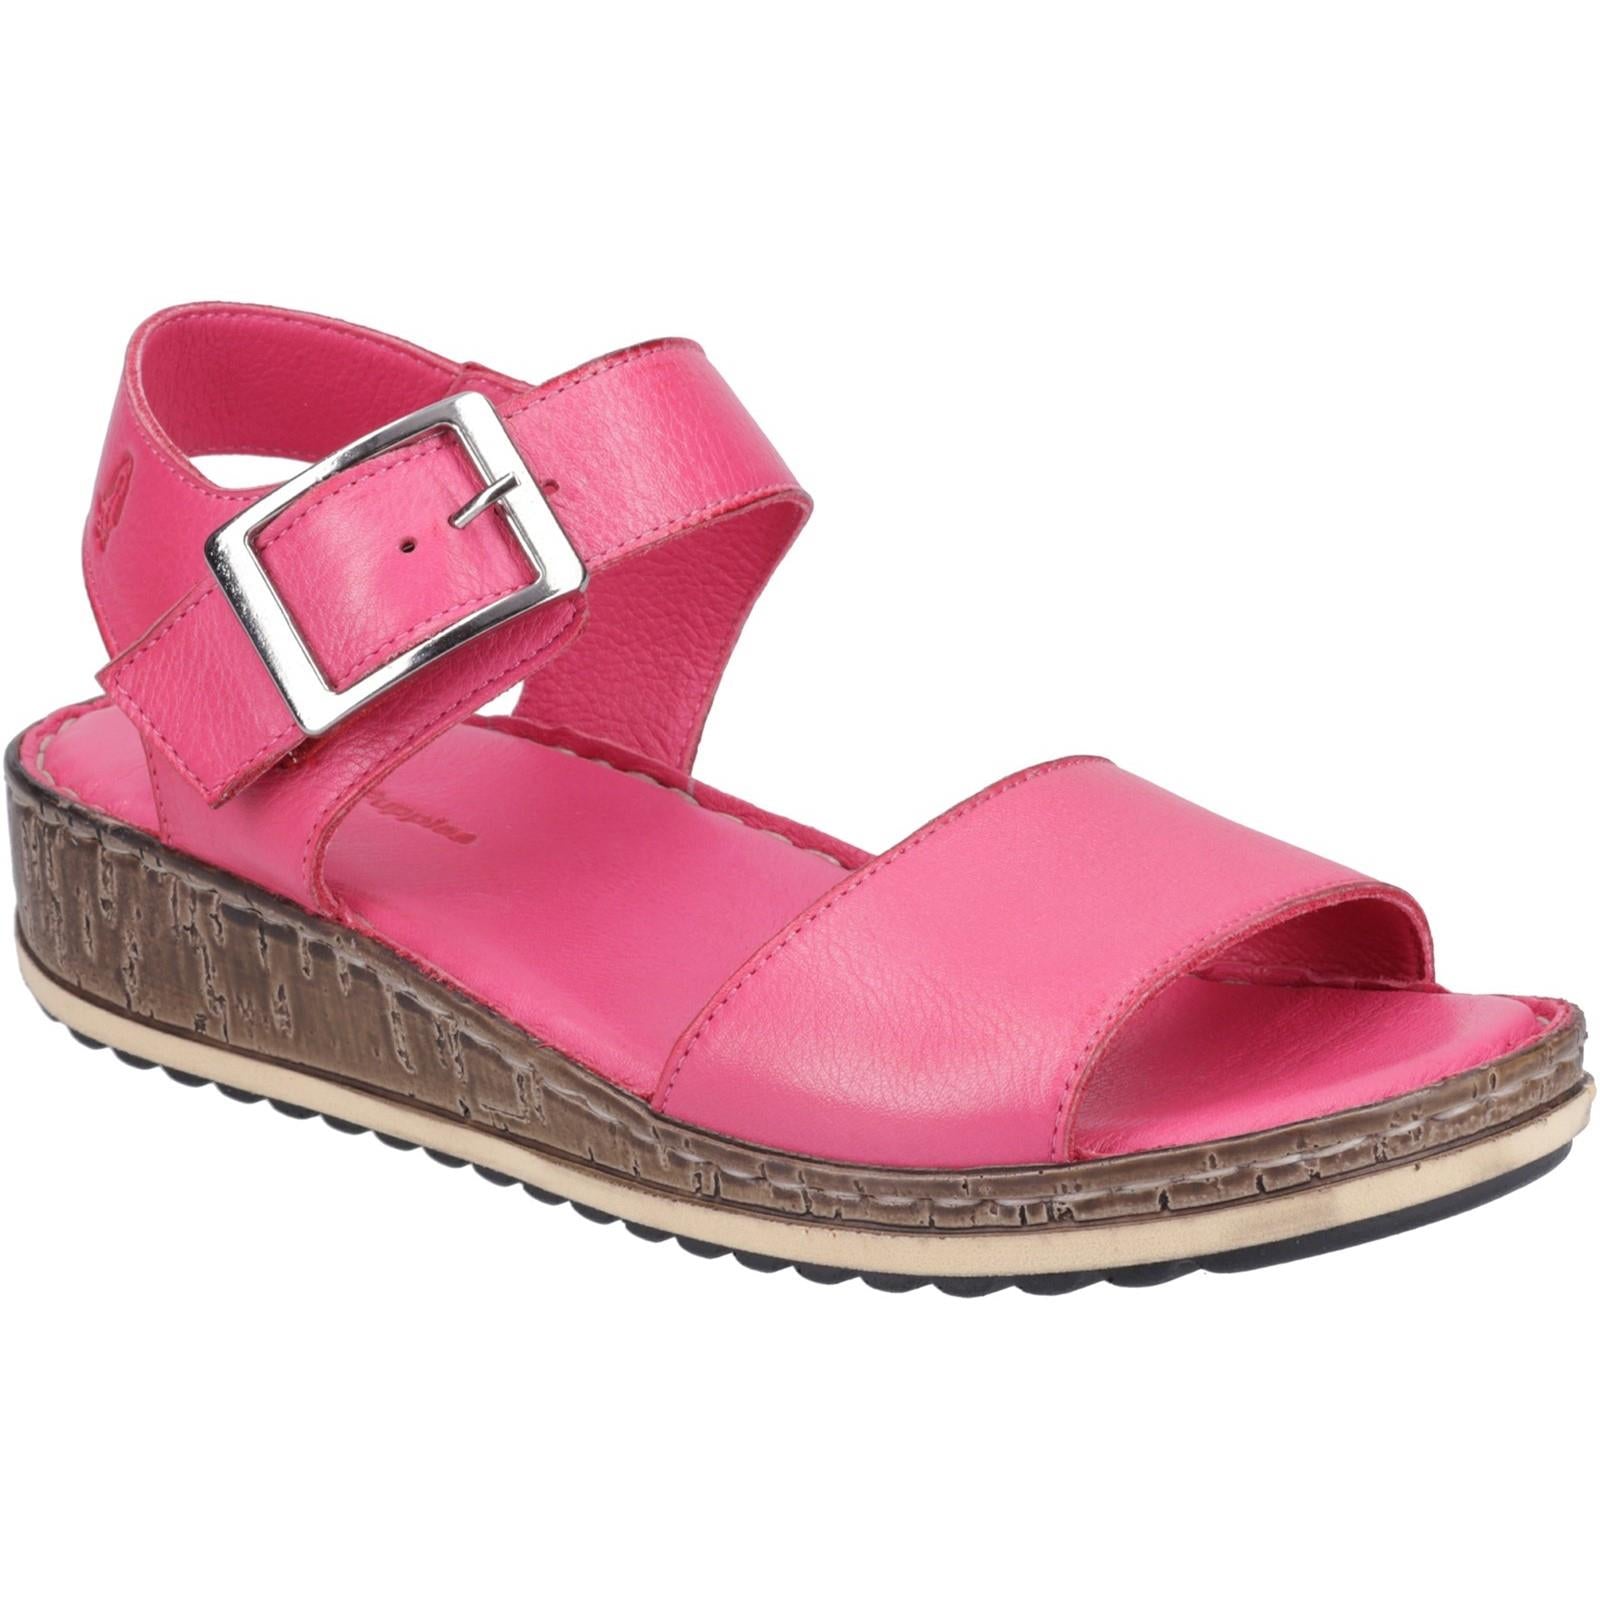 Hush Puppies Ellie fuchsia pink leather ladies summer buckle wedge sandals